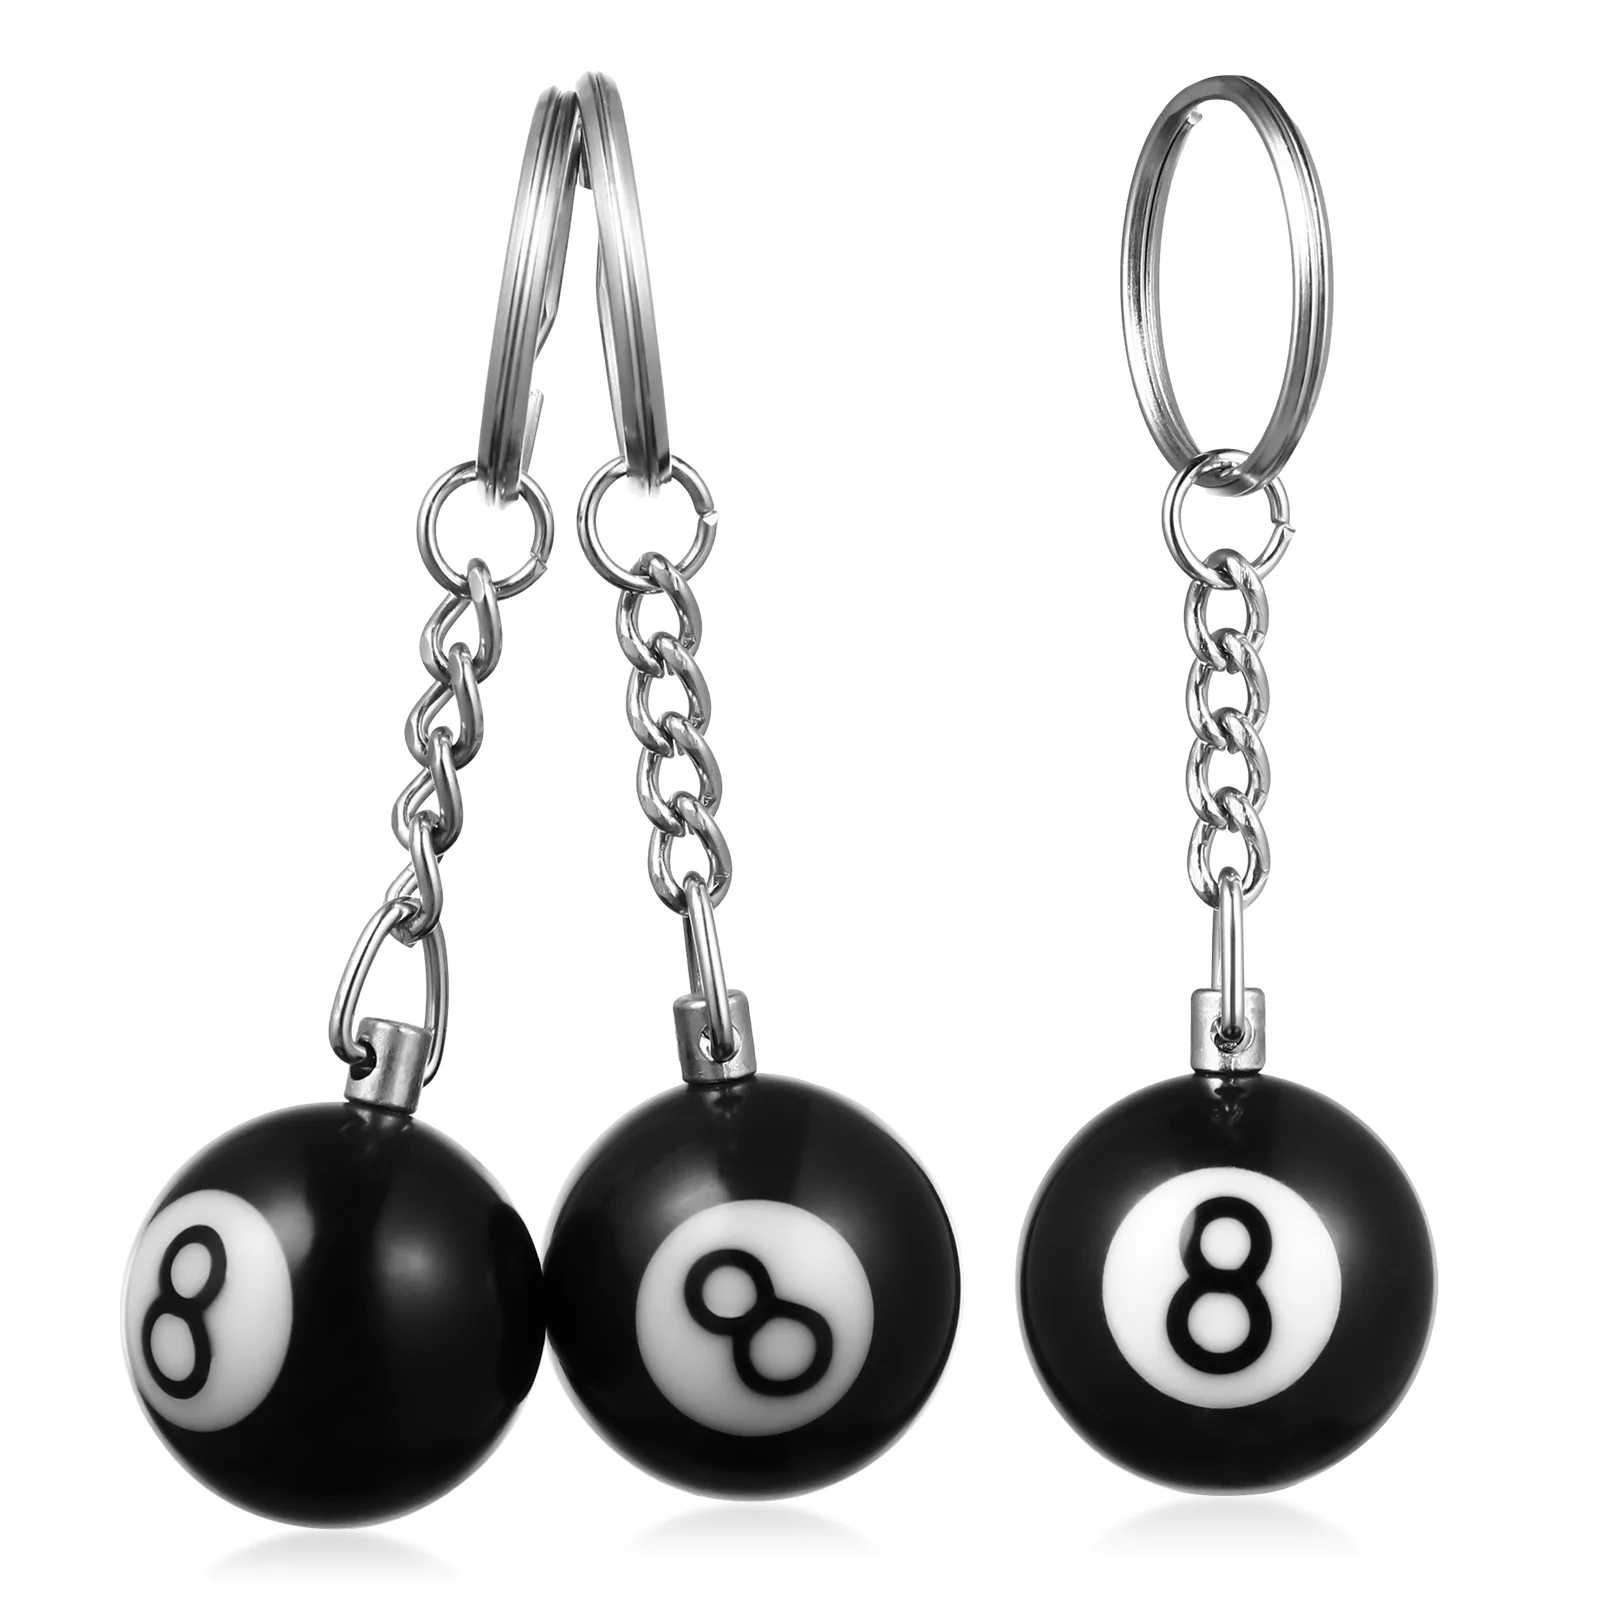 Ball Billiards Pool Key Sports Rings Billiard Gifts Match Charm Hanging Keyrings Pendants Chain Balls Mini Metal Keepsakes